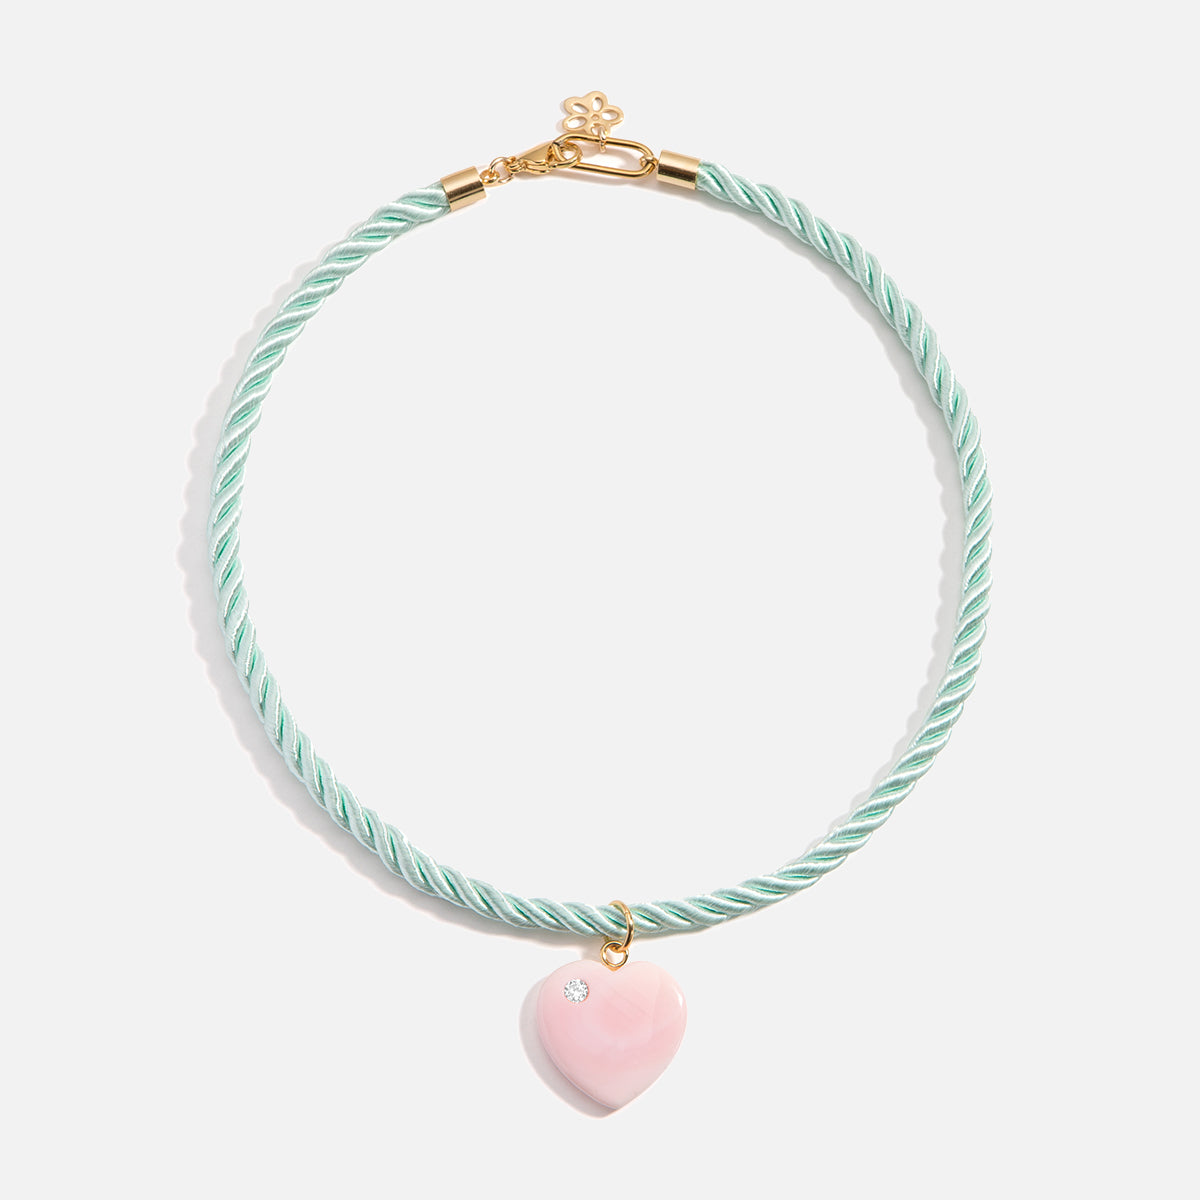 Seaside Souvenir Necklace, Heart